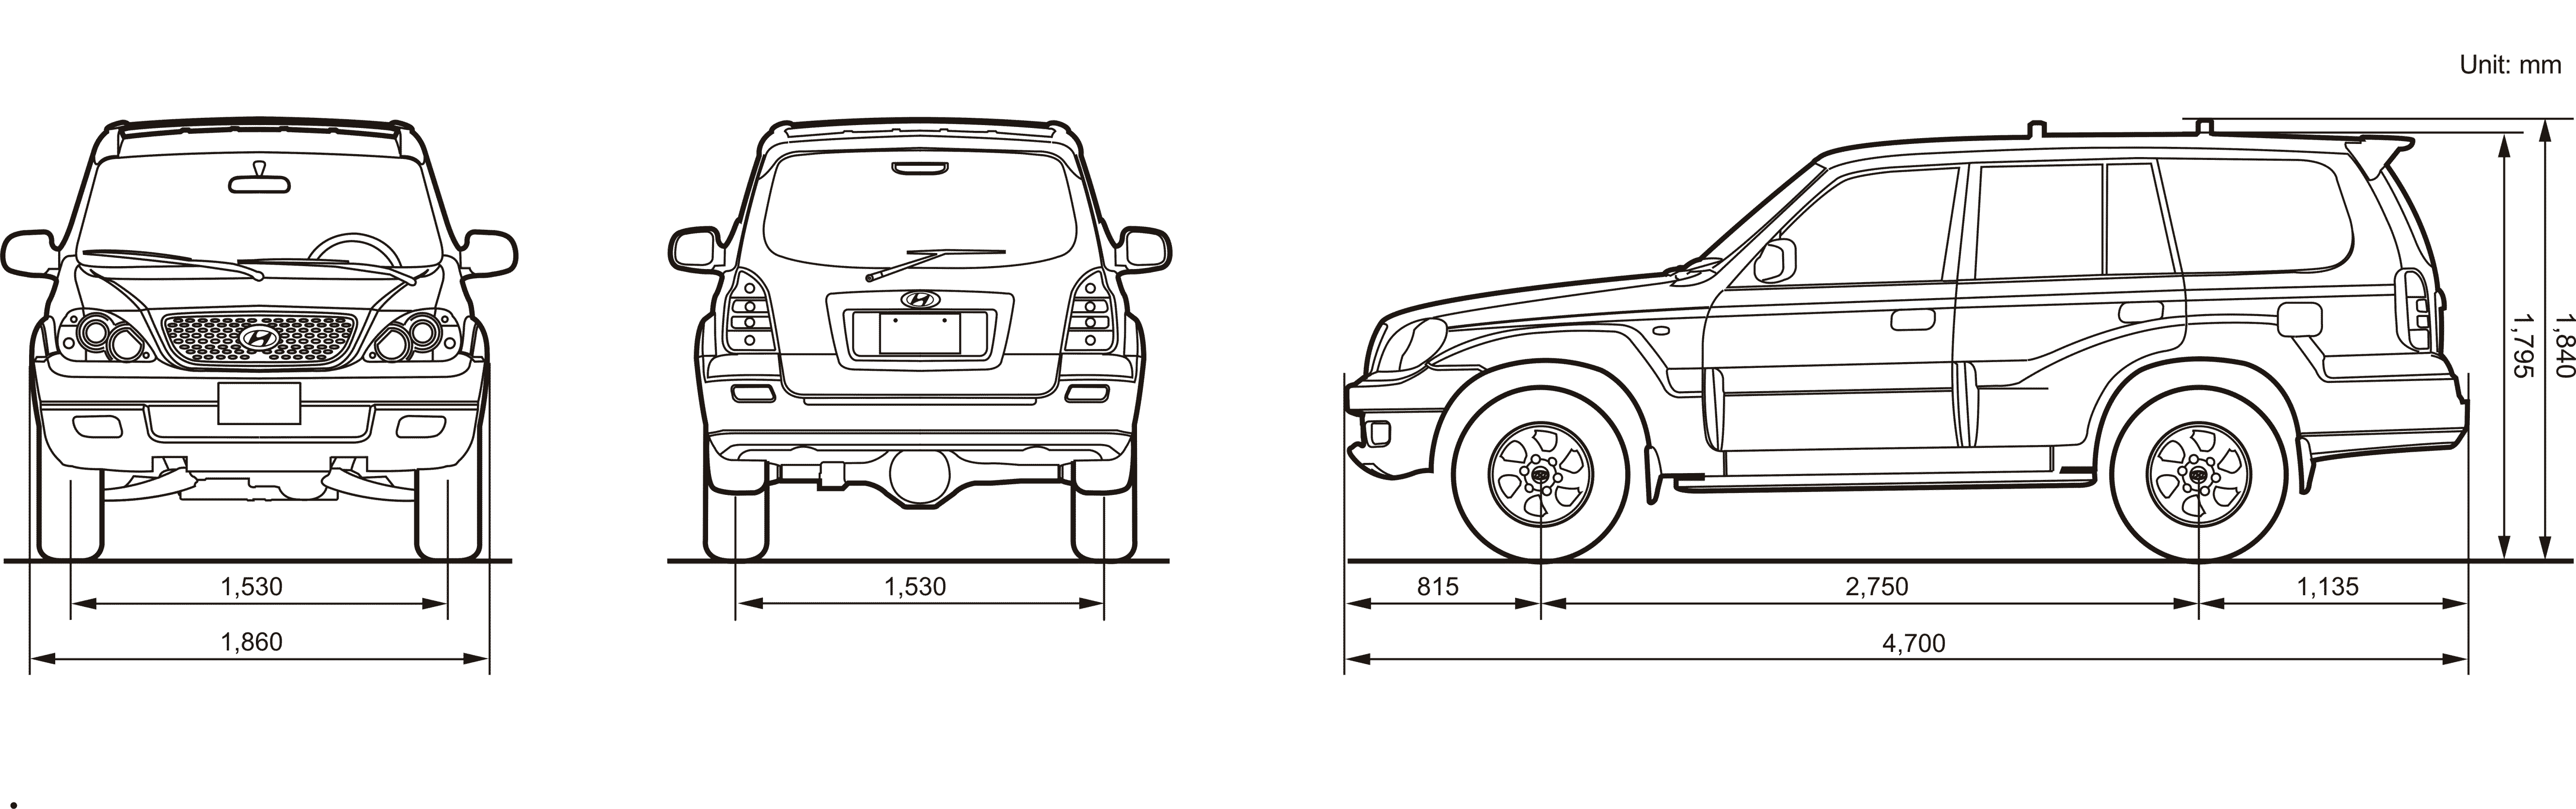 Hyundai Terracan blueprint